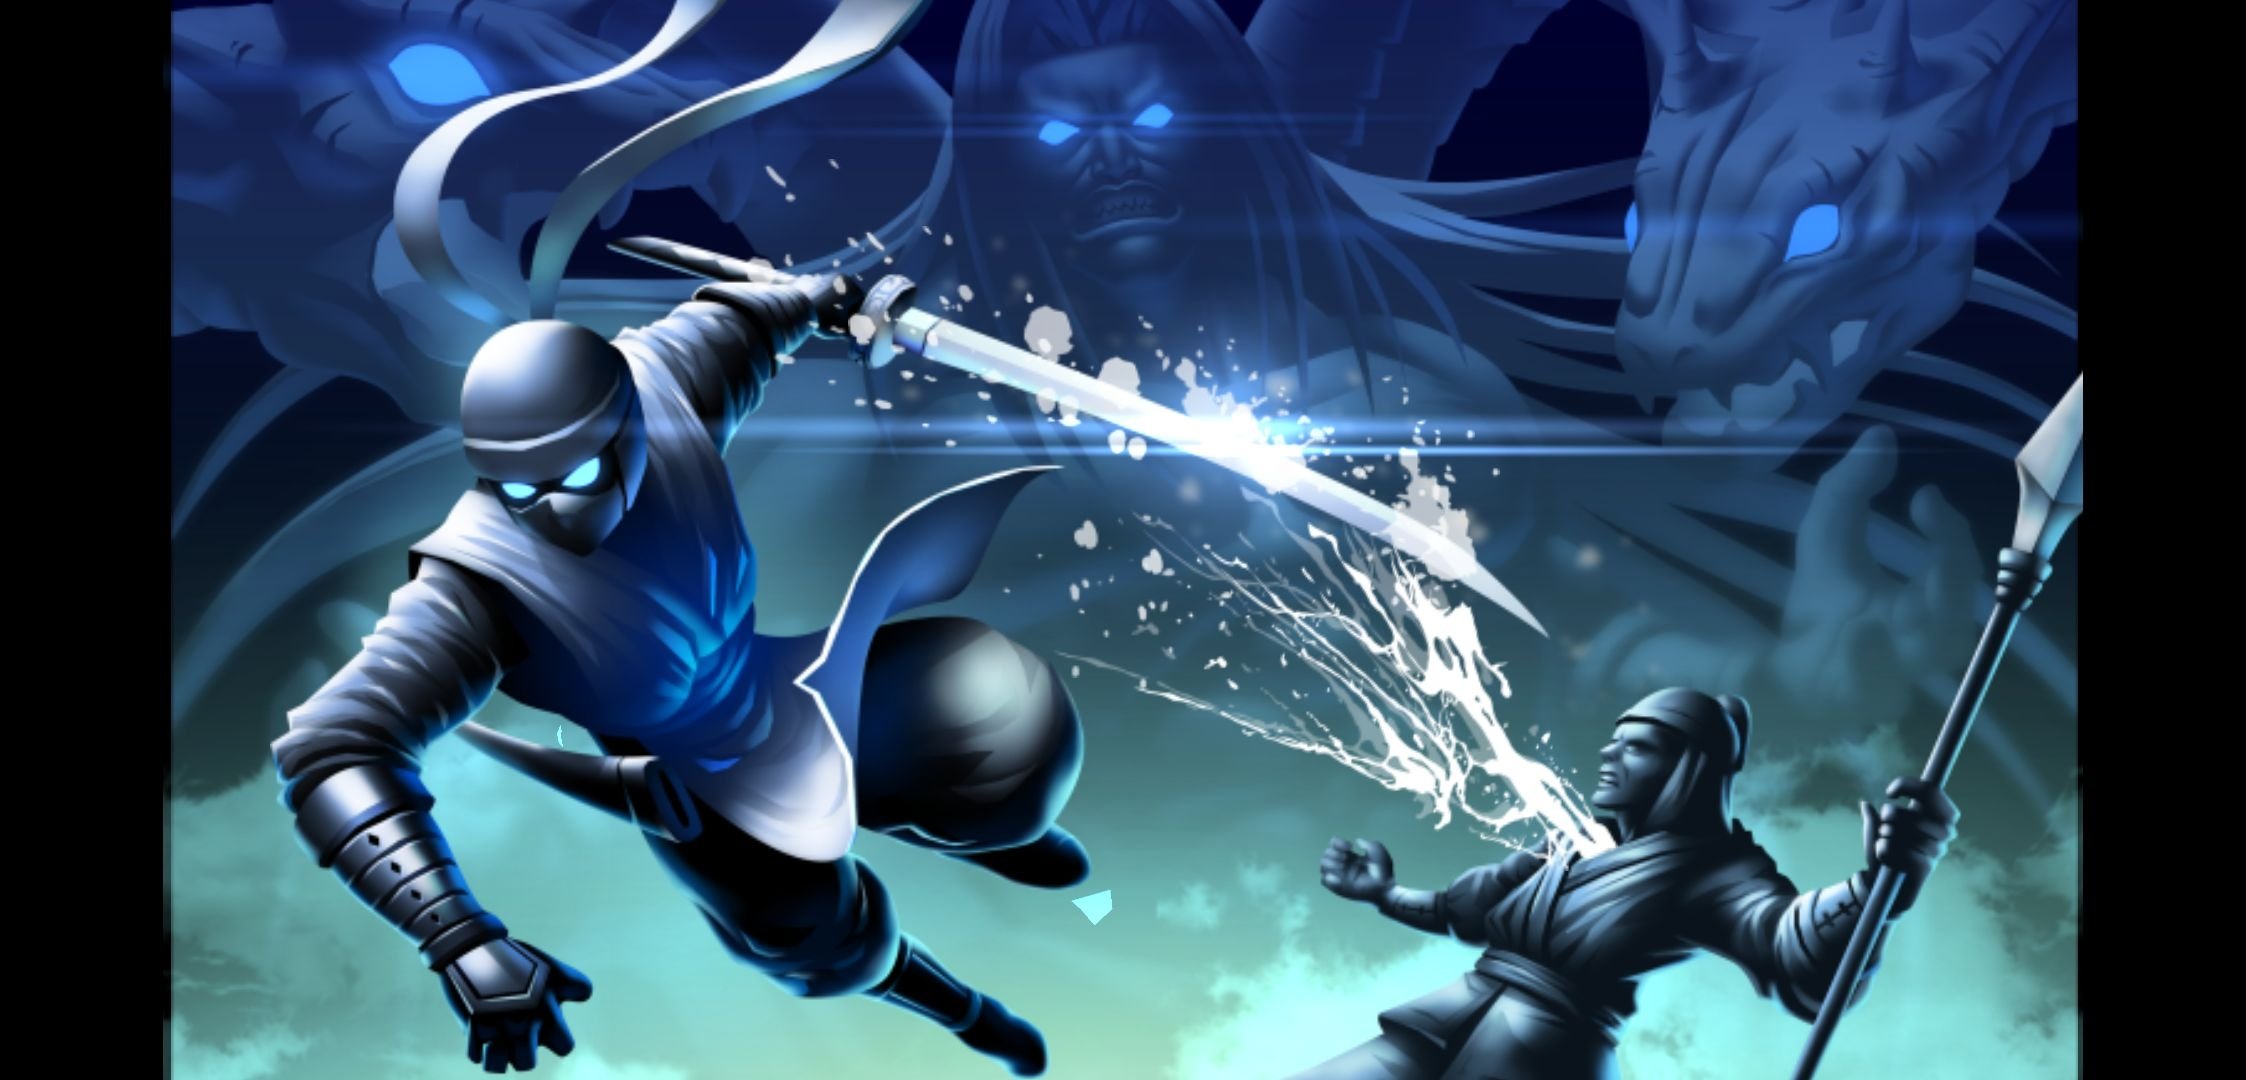 Download Ninja Warrior Android latest Version